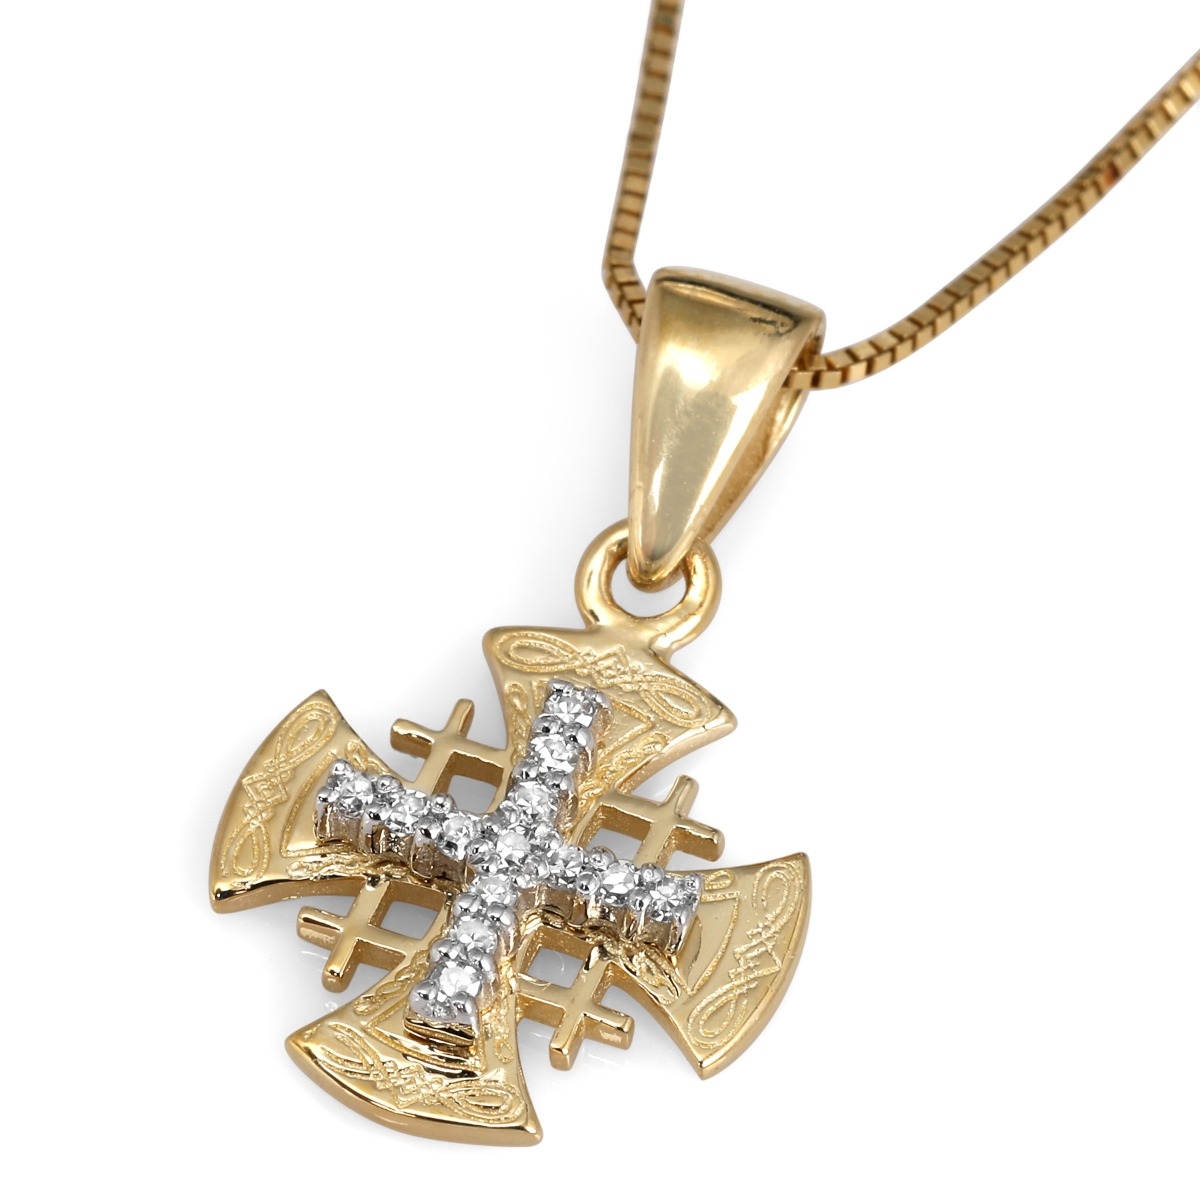 Anbinder Jewelry 14K Yellow Gold Splayed Jerusalem Cross with Celtic Knots Border and 13 Diamonds - 1